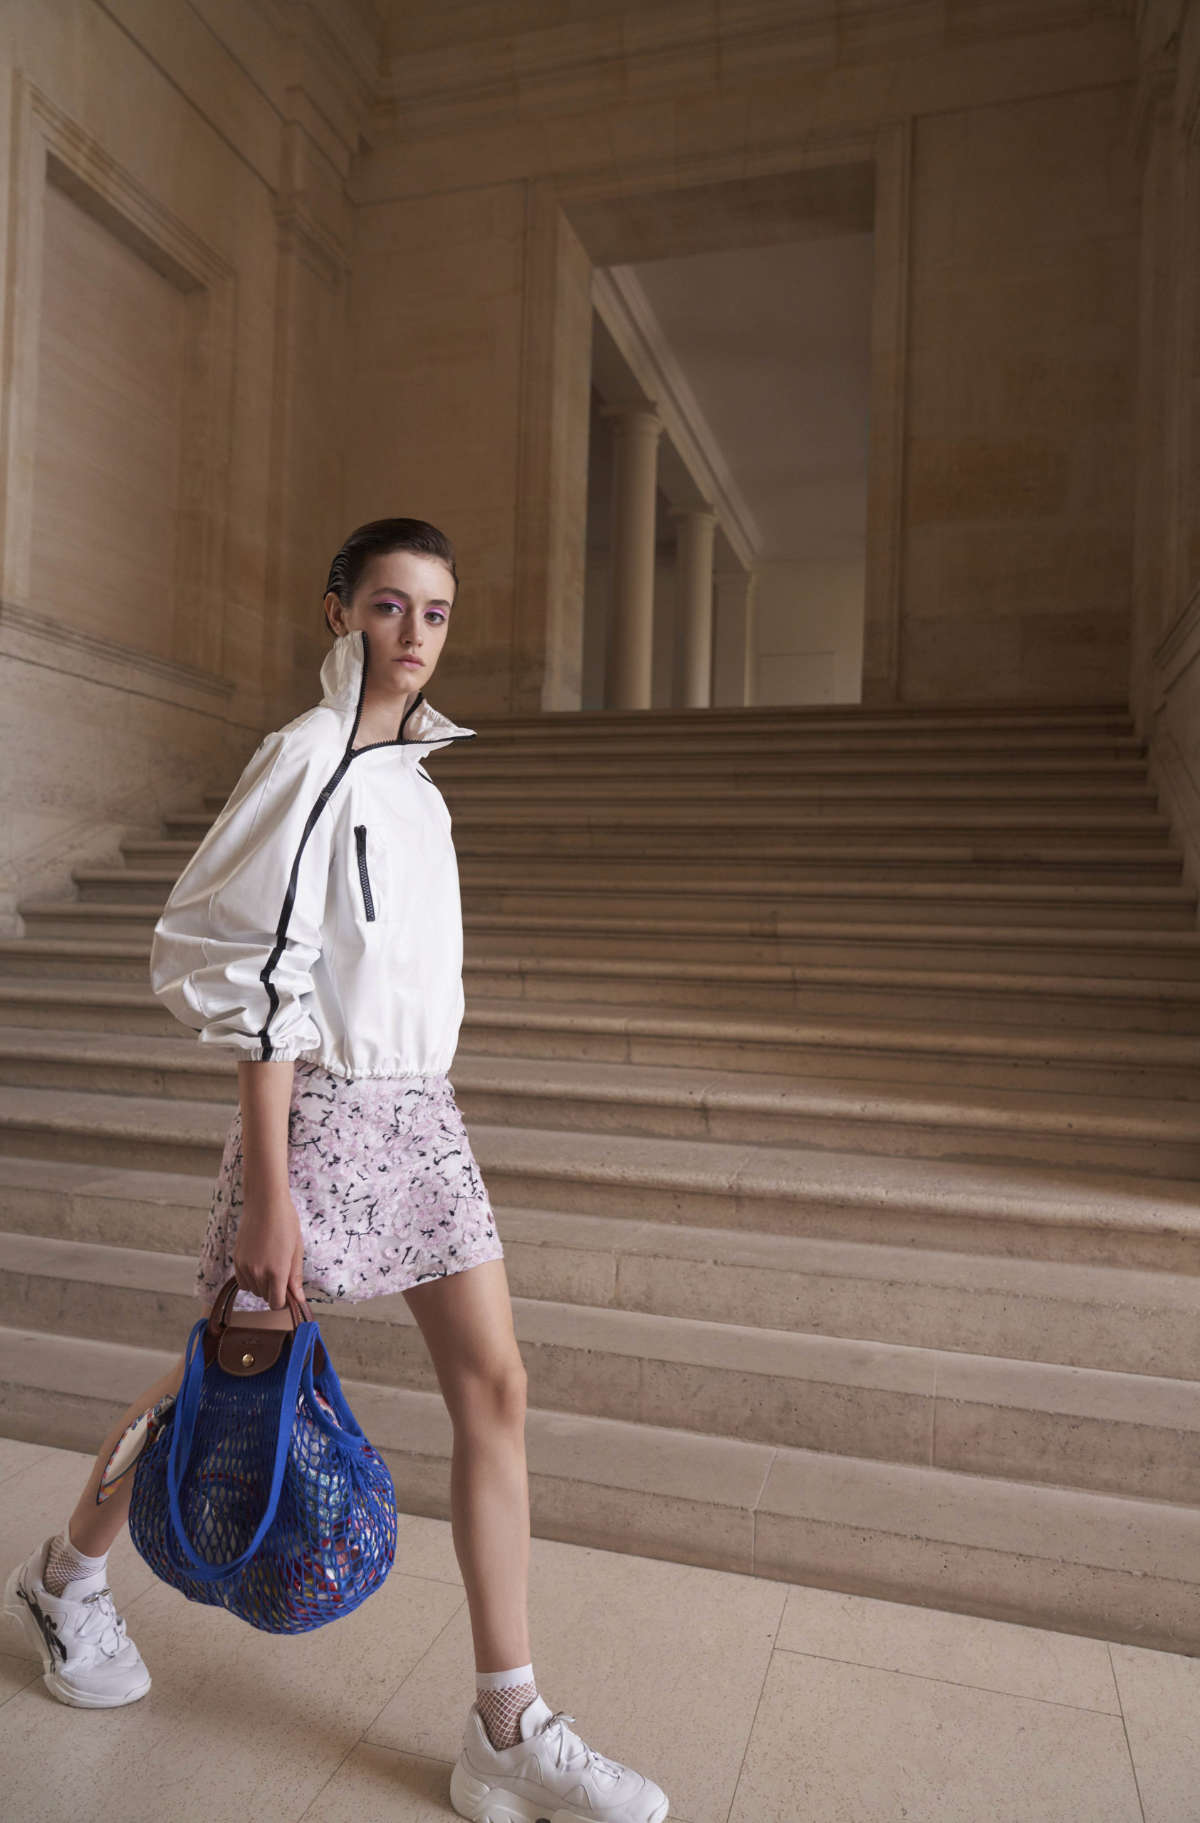 Longchamp Spring & Summer 2021 Collection - An Ode To Parisian Femininity